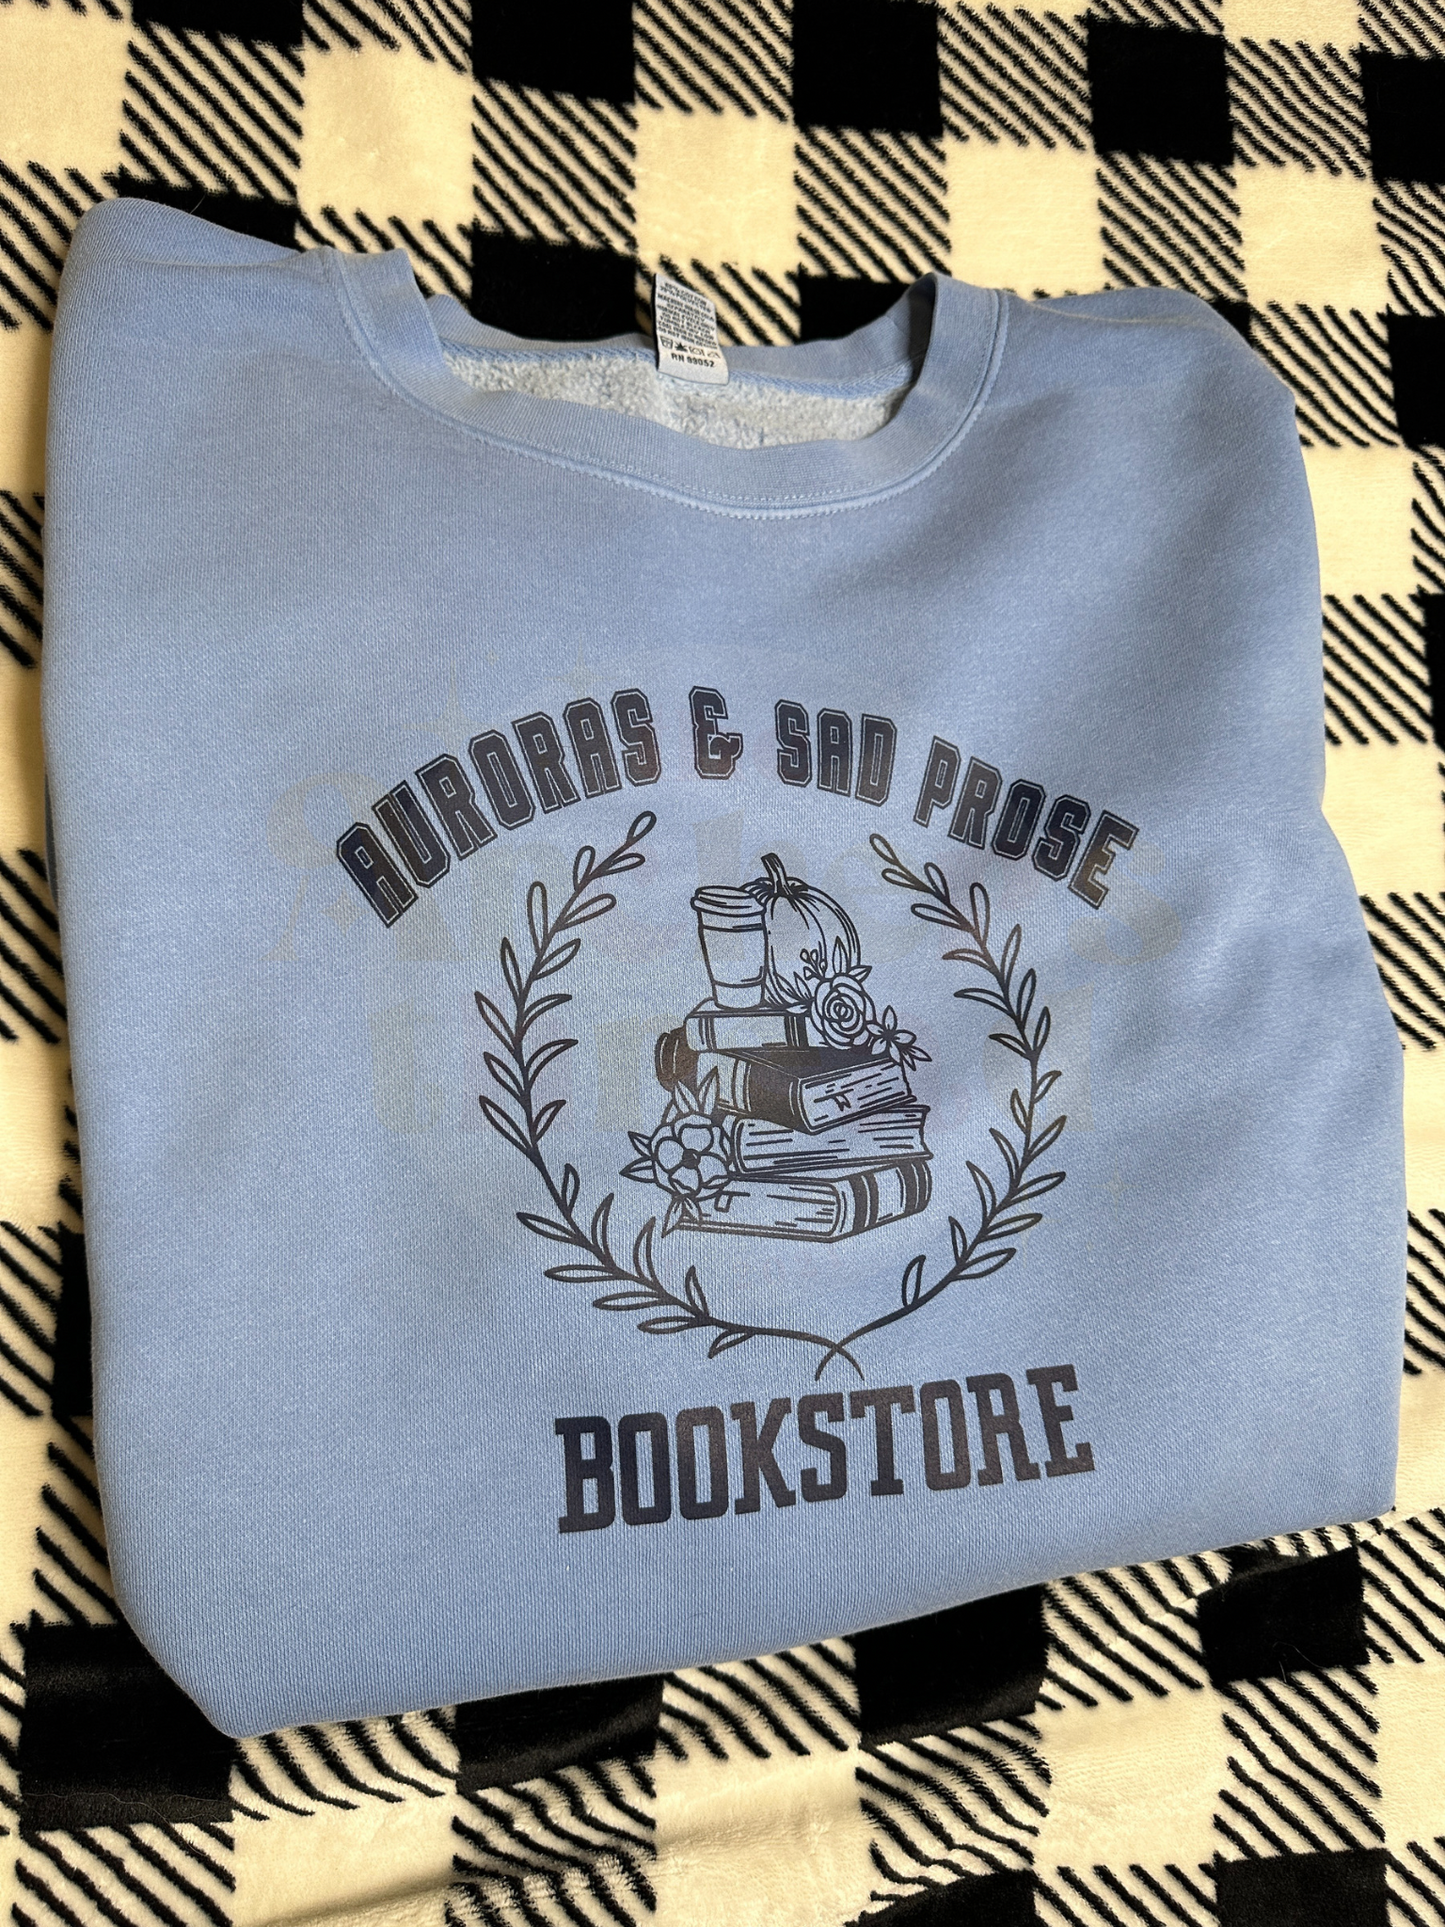 Auroras & Sad Prose Bookstore Top